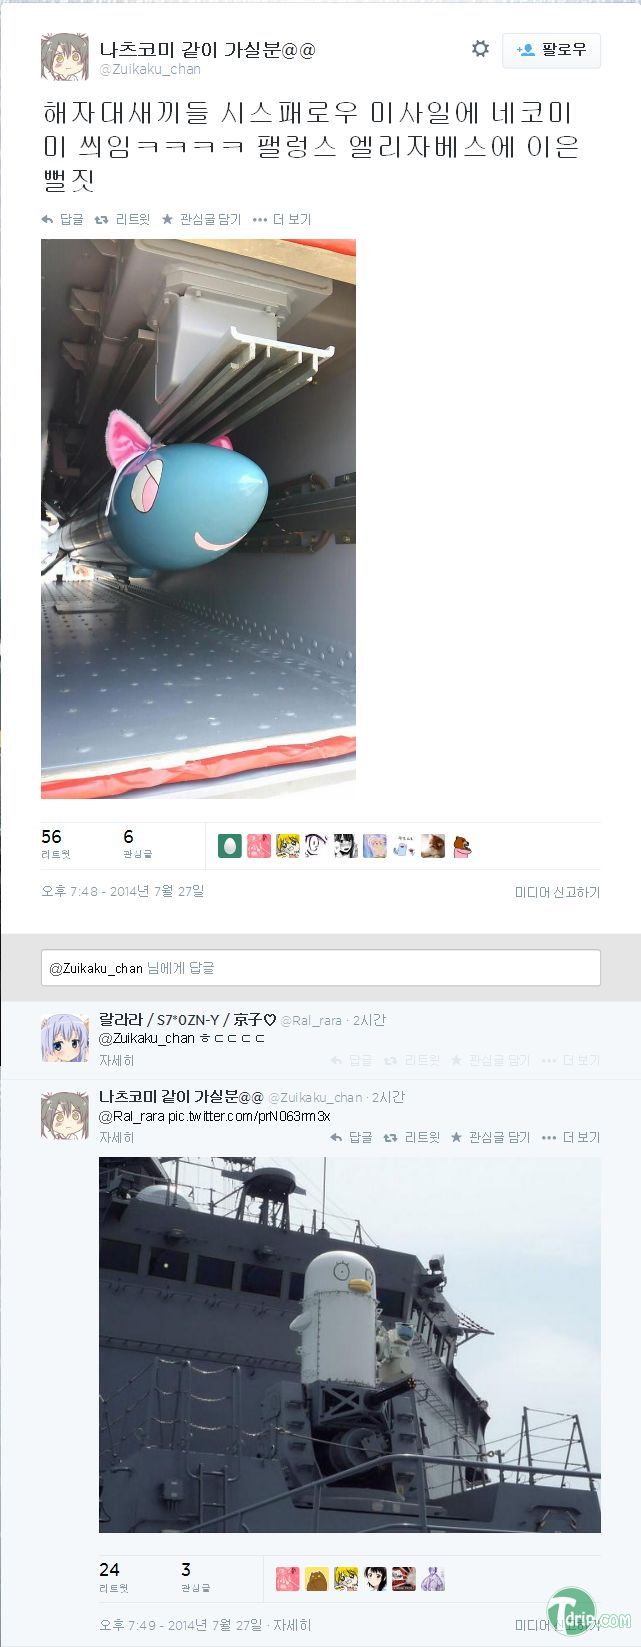 FireShot Screen Capture #1437 - '트위터 _ Zuikaku_chan_ 해자대새끼들 ___' - twitter_com_Zuikaku_chan_status_493347075573043200.jpg